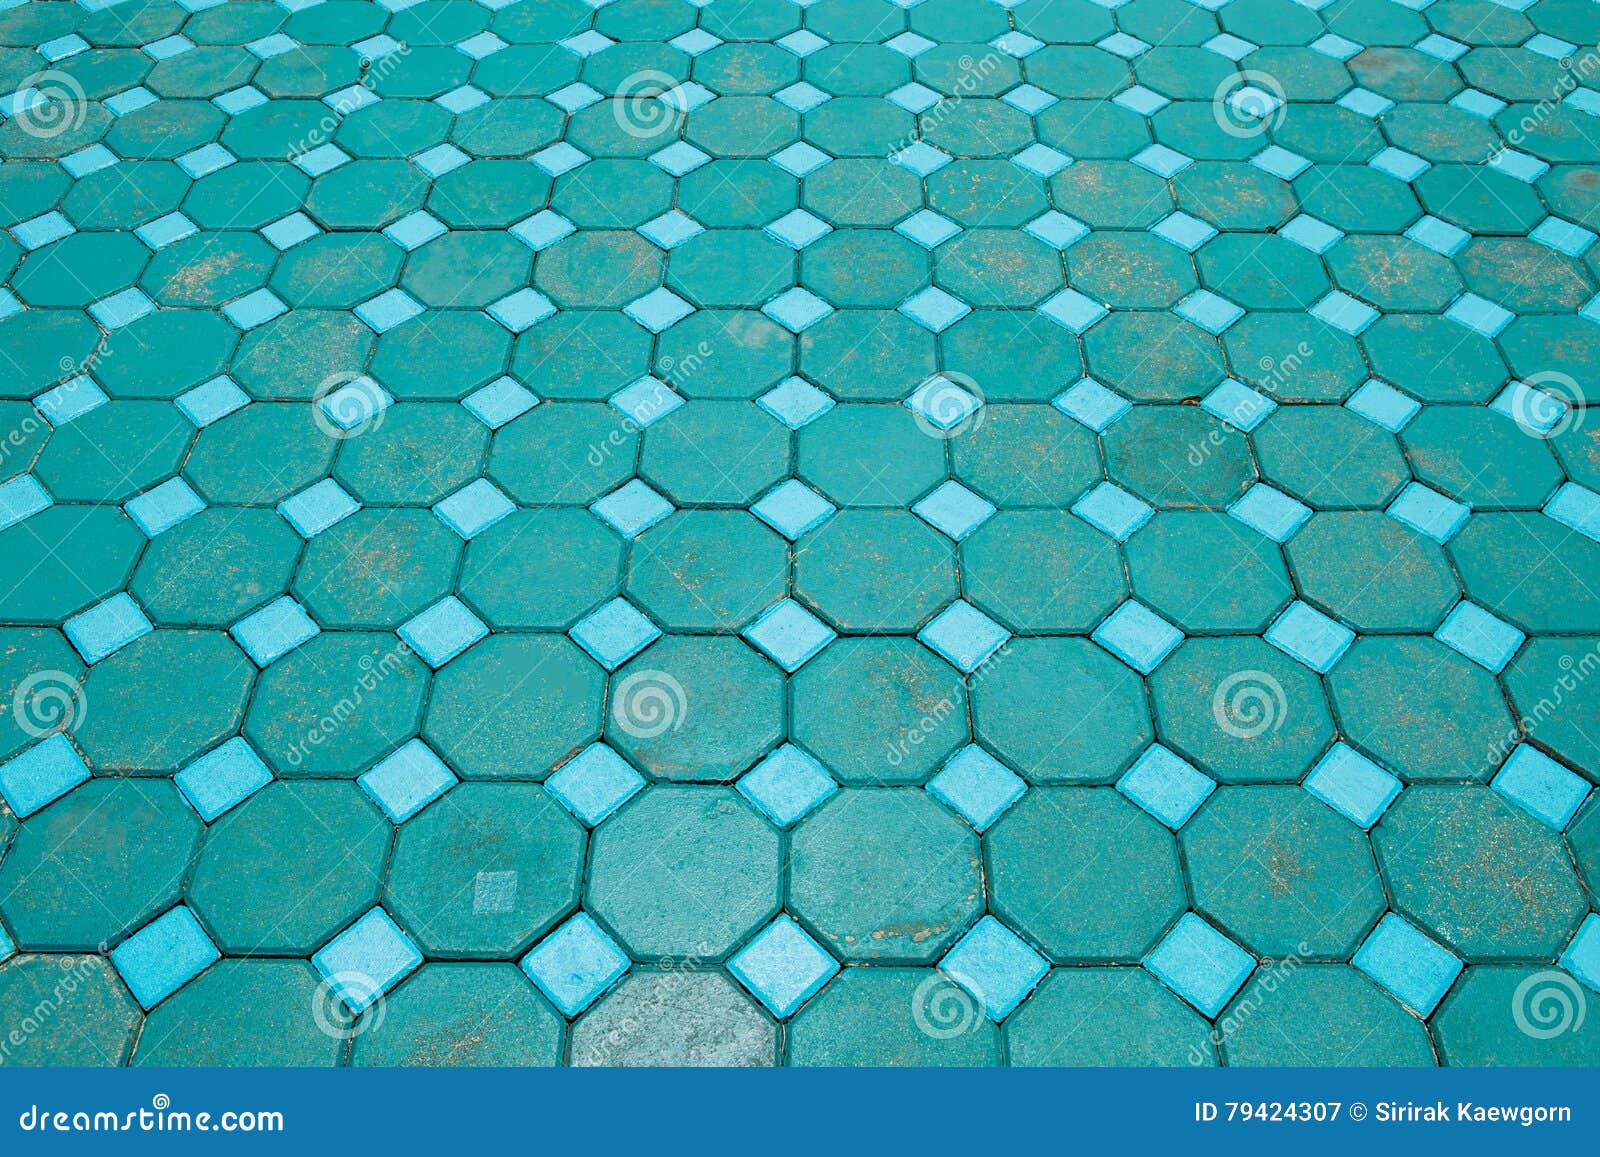 Cement block floor pattern stock image. Image of shape - 79424307